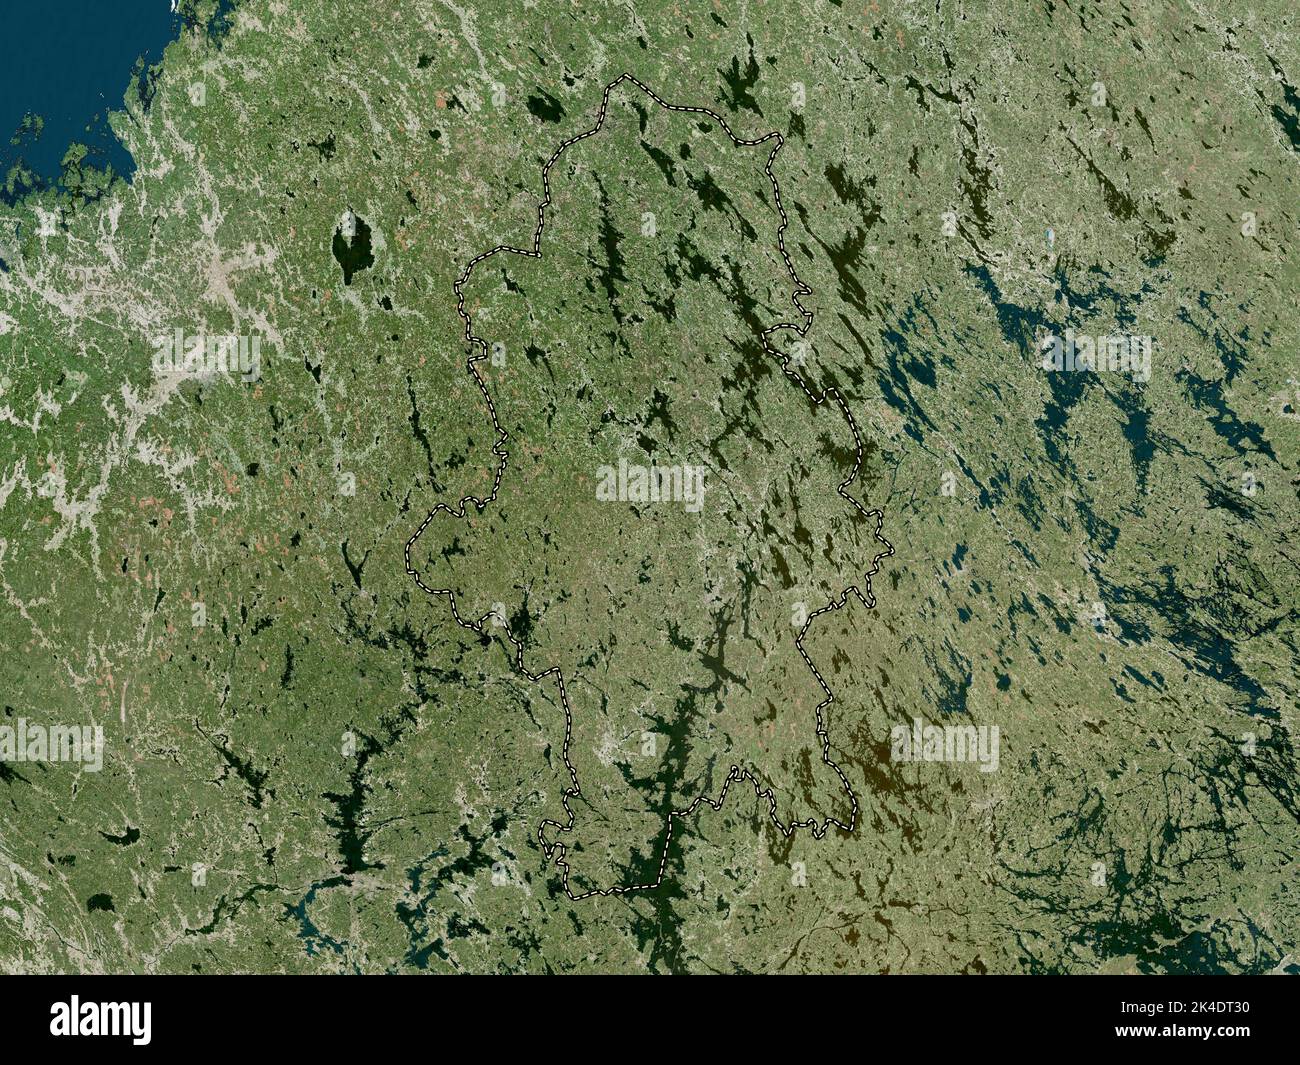 Central Finland, region of Finland. High resolution satellite map Stock Photo